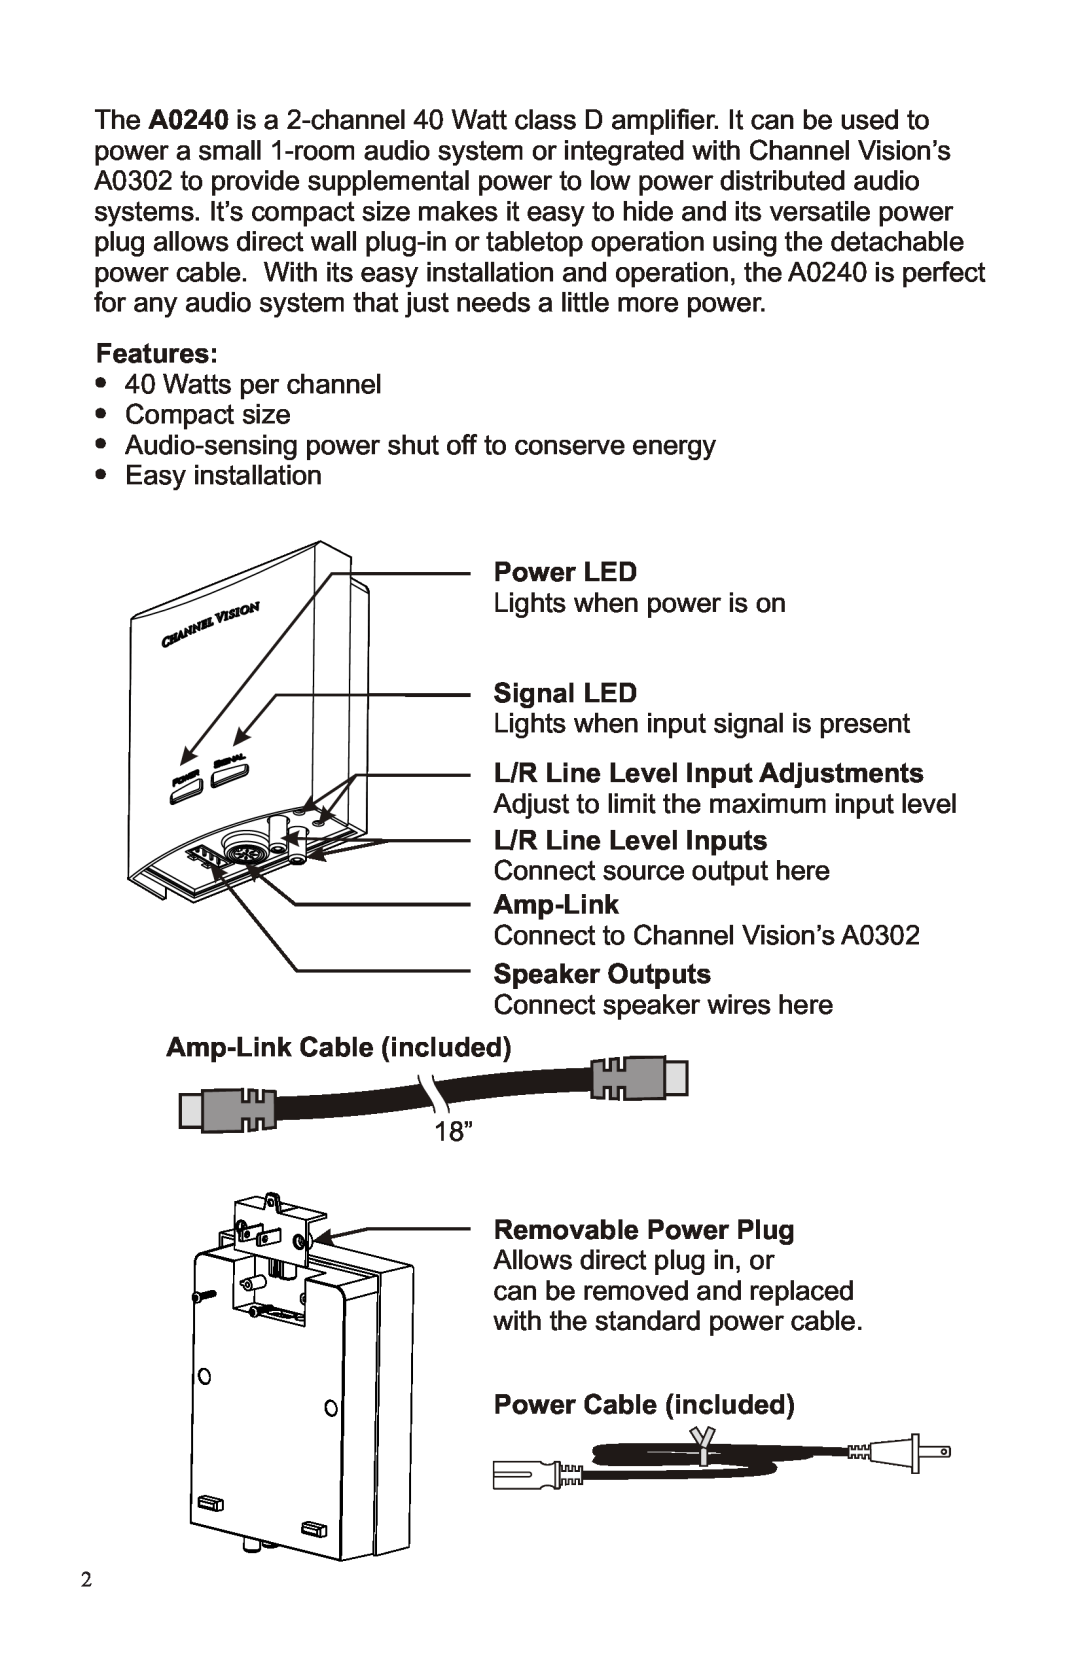 Channel Vision A0240 Features, Power LED, Signal LED, L/R Line Level Input Adjustments, L/R Line Level Inputs, Amp-Link 